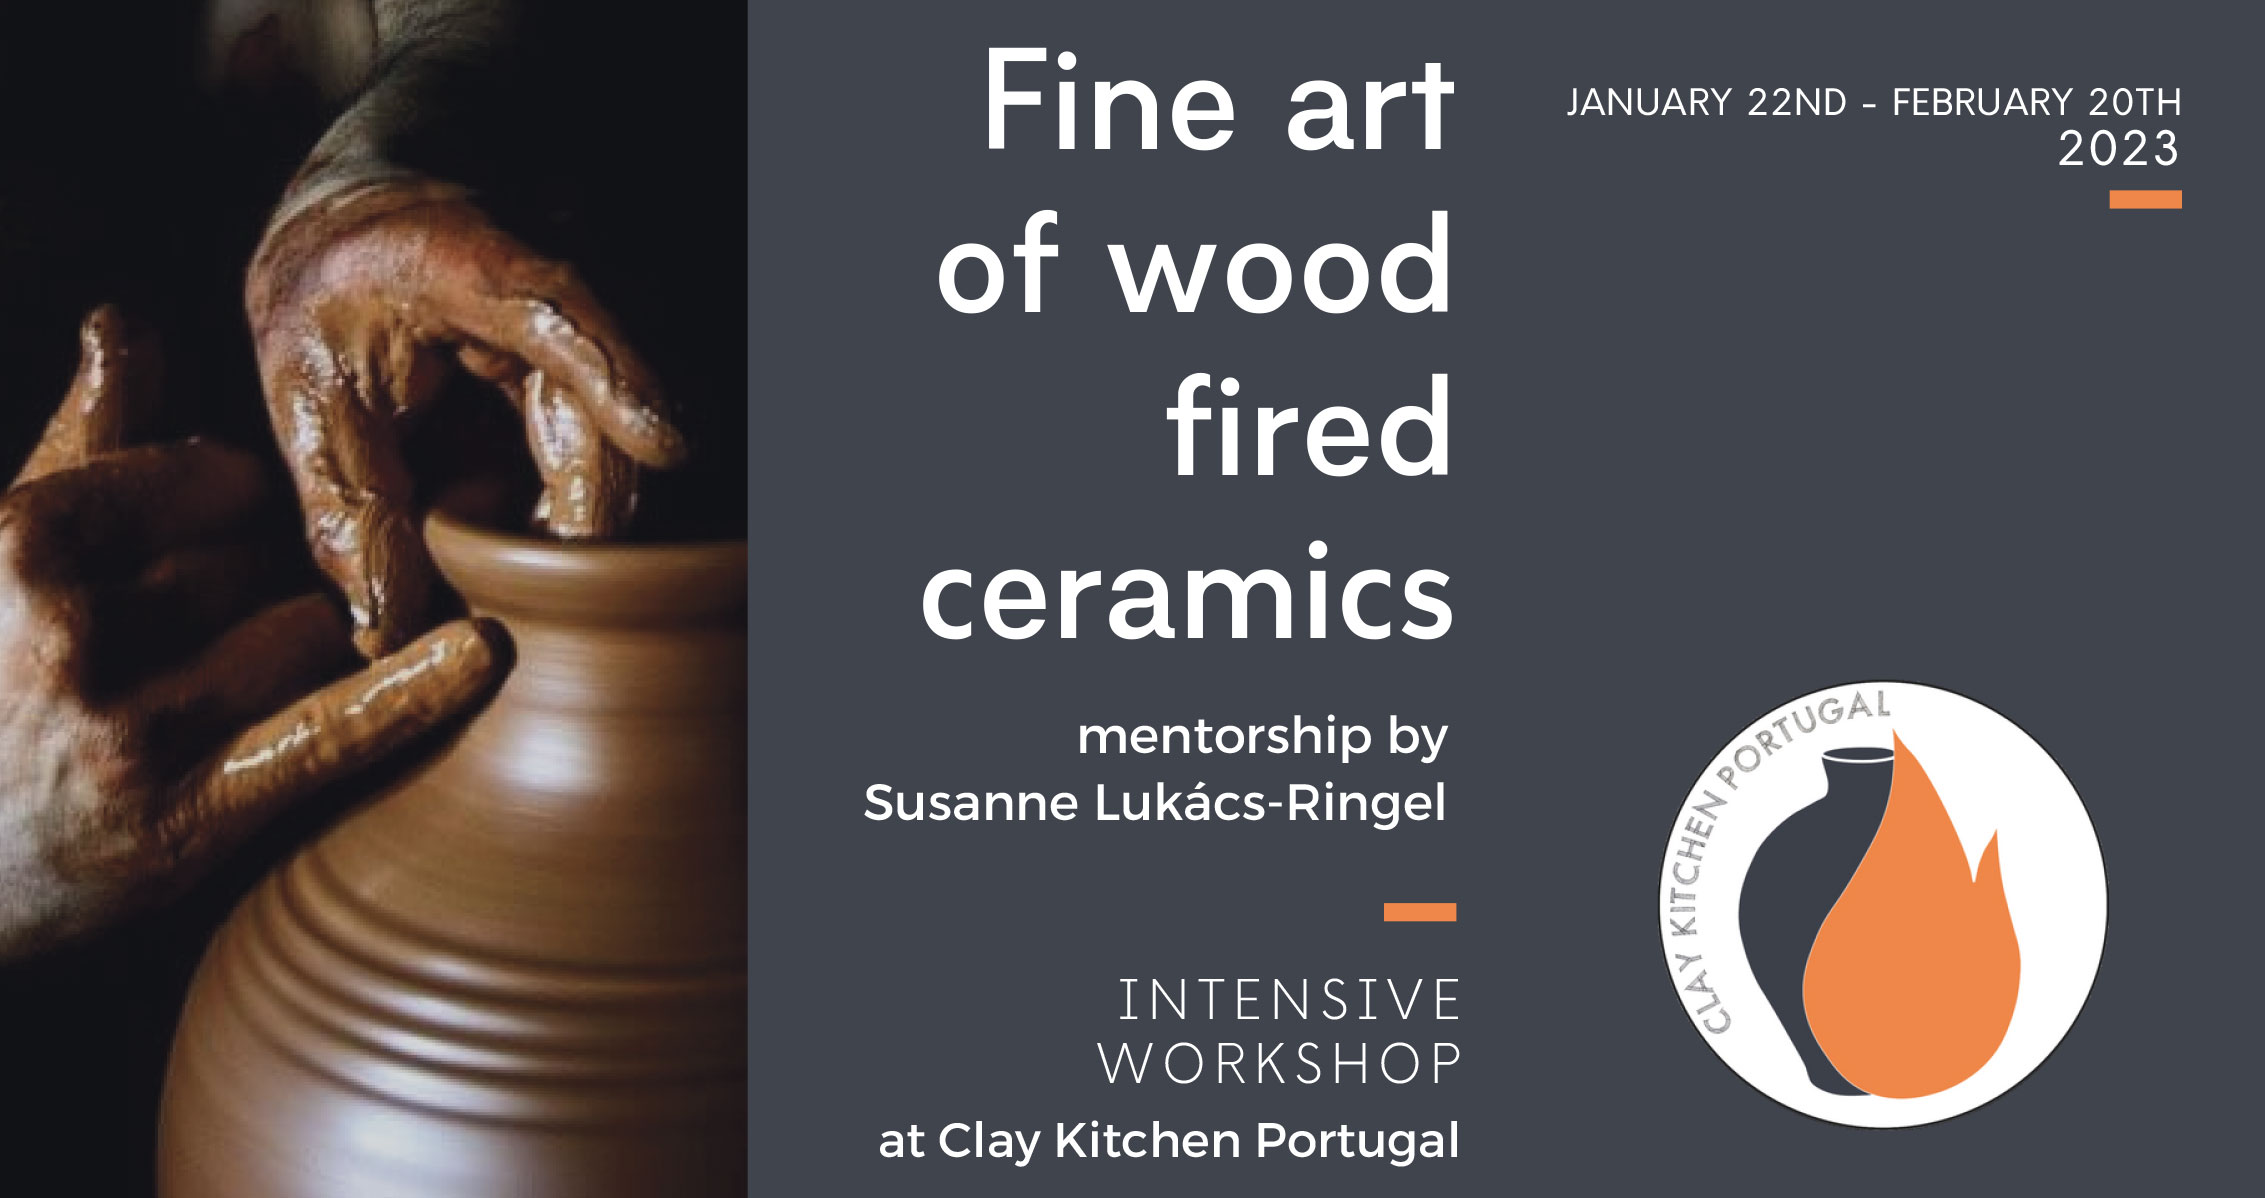 Workshop at Clay Kitchen Portugal with Susanne Lukács-Ringel